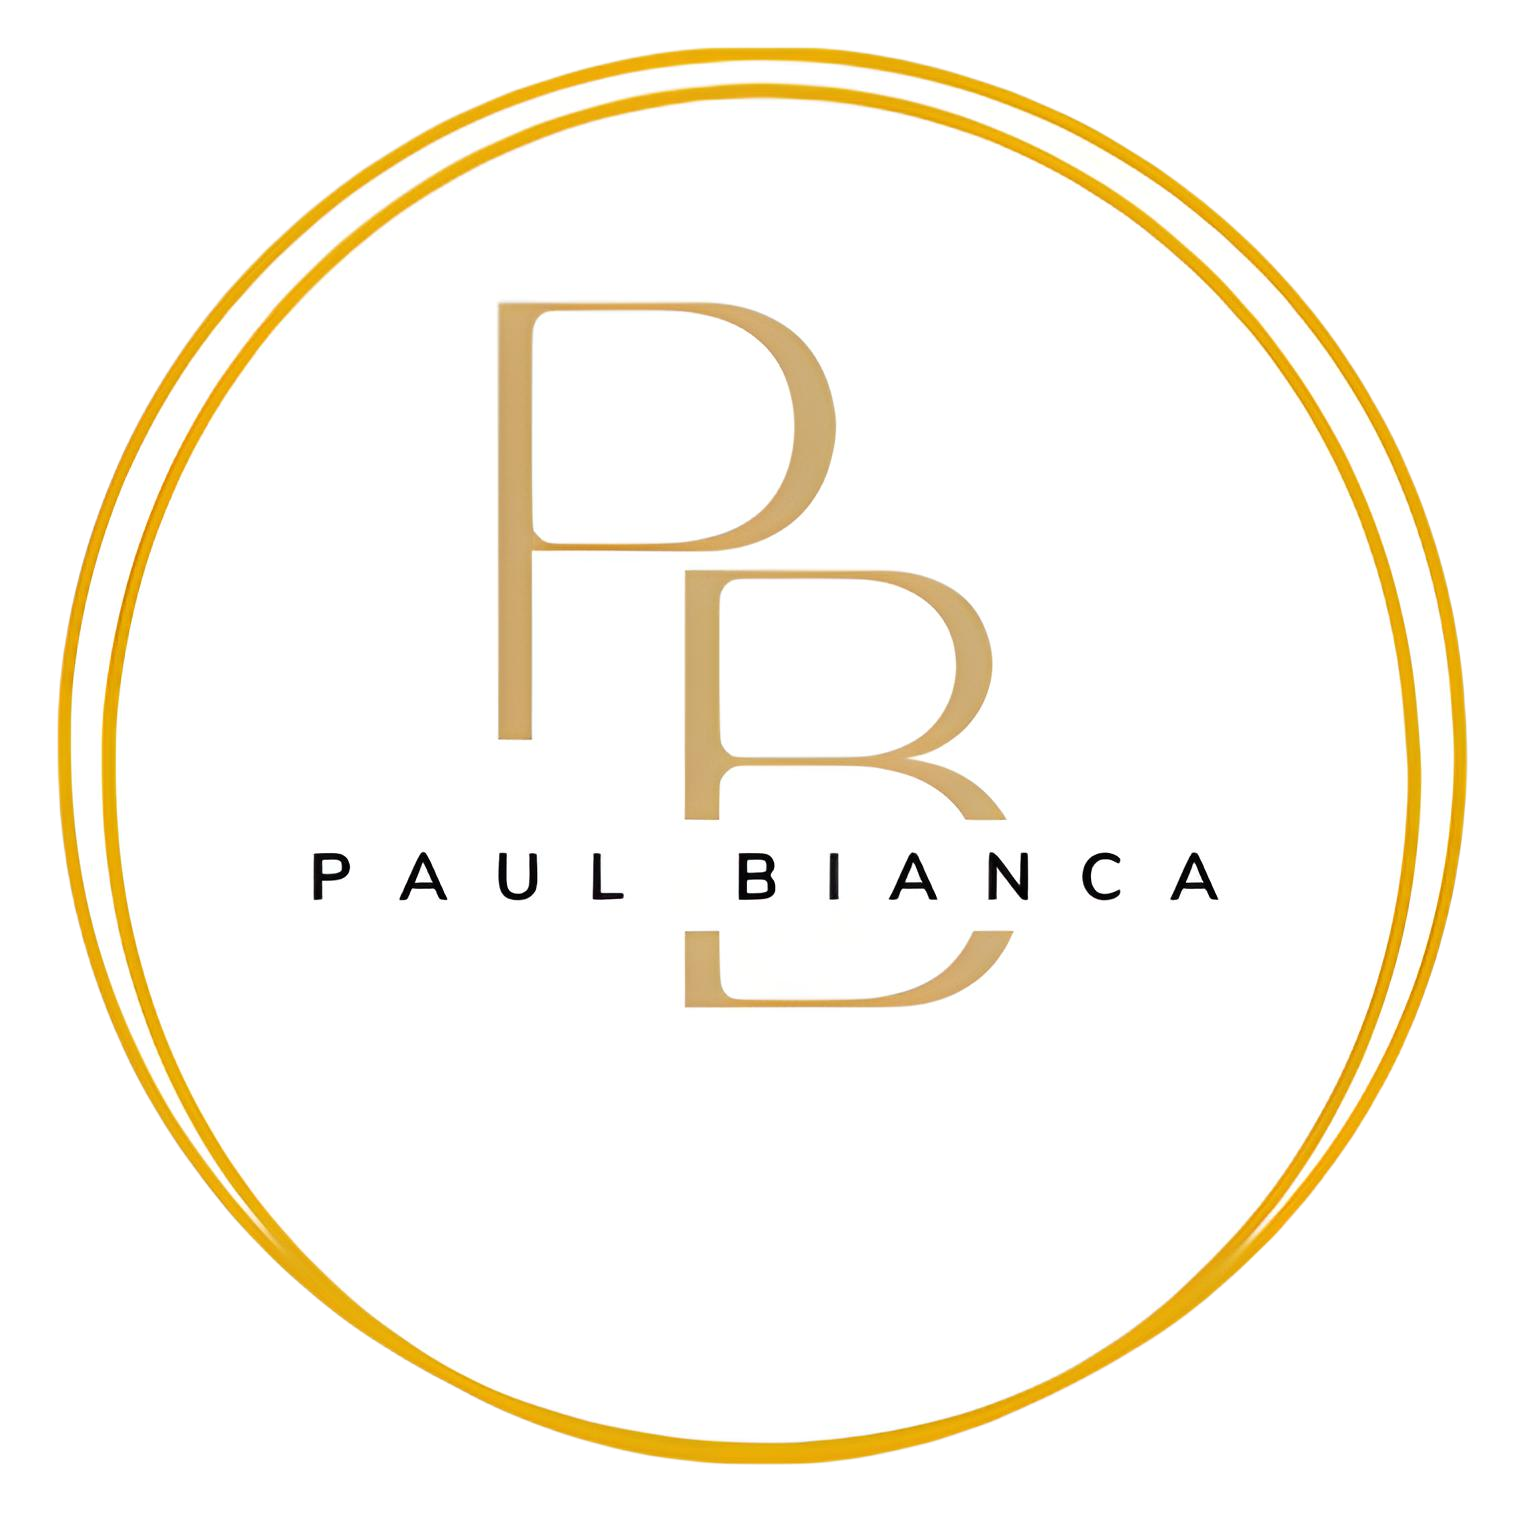 PAUL BIANCA